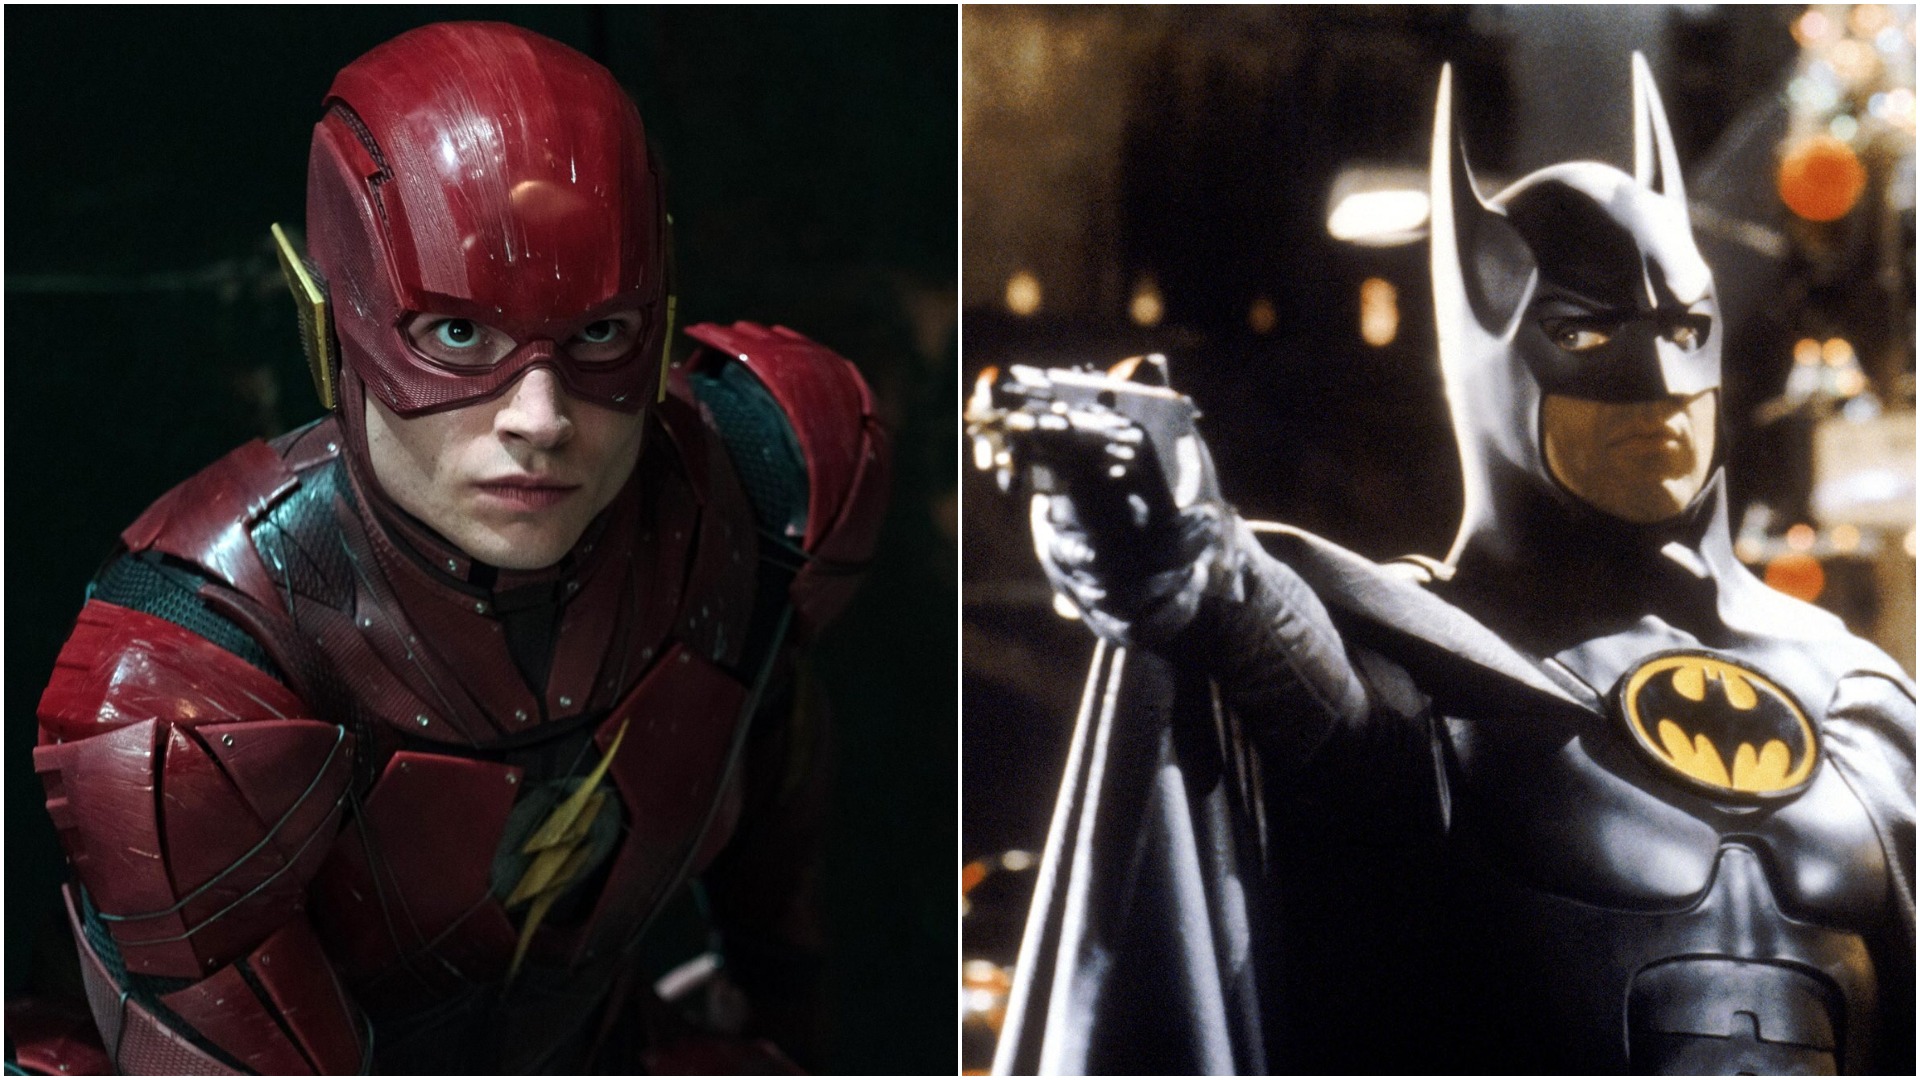 The Flash: Batman Set Photo Could Be Teasing Villain From Dark Knight's  Past | Den of Geek